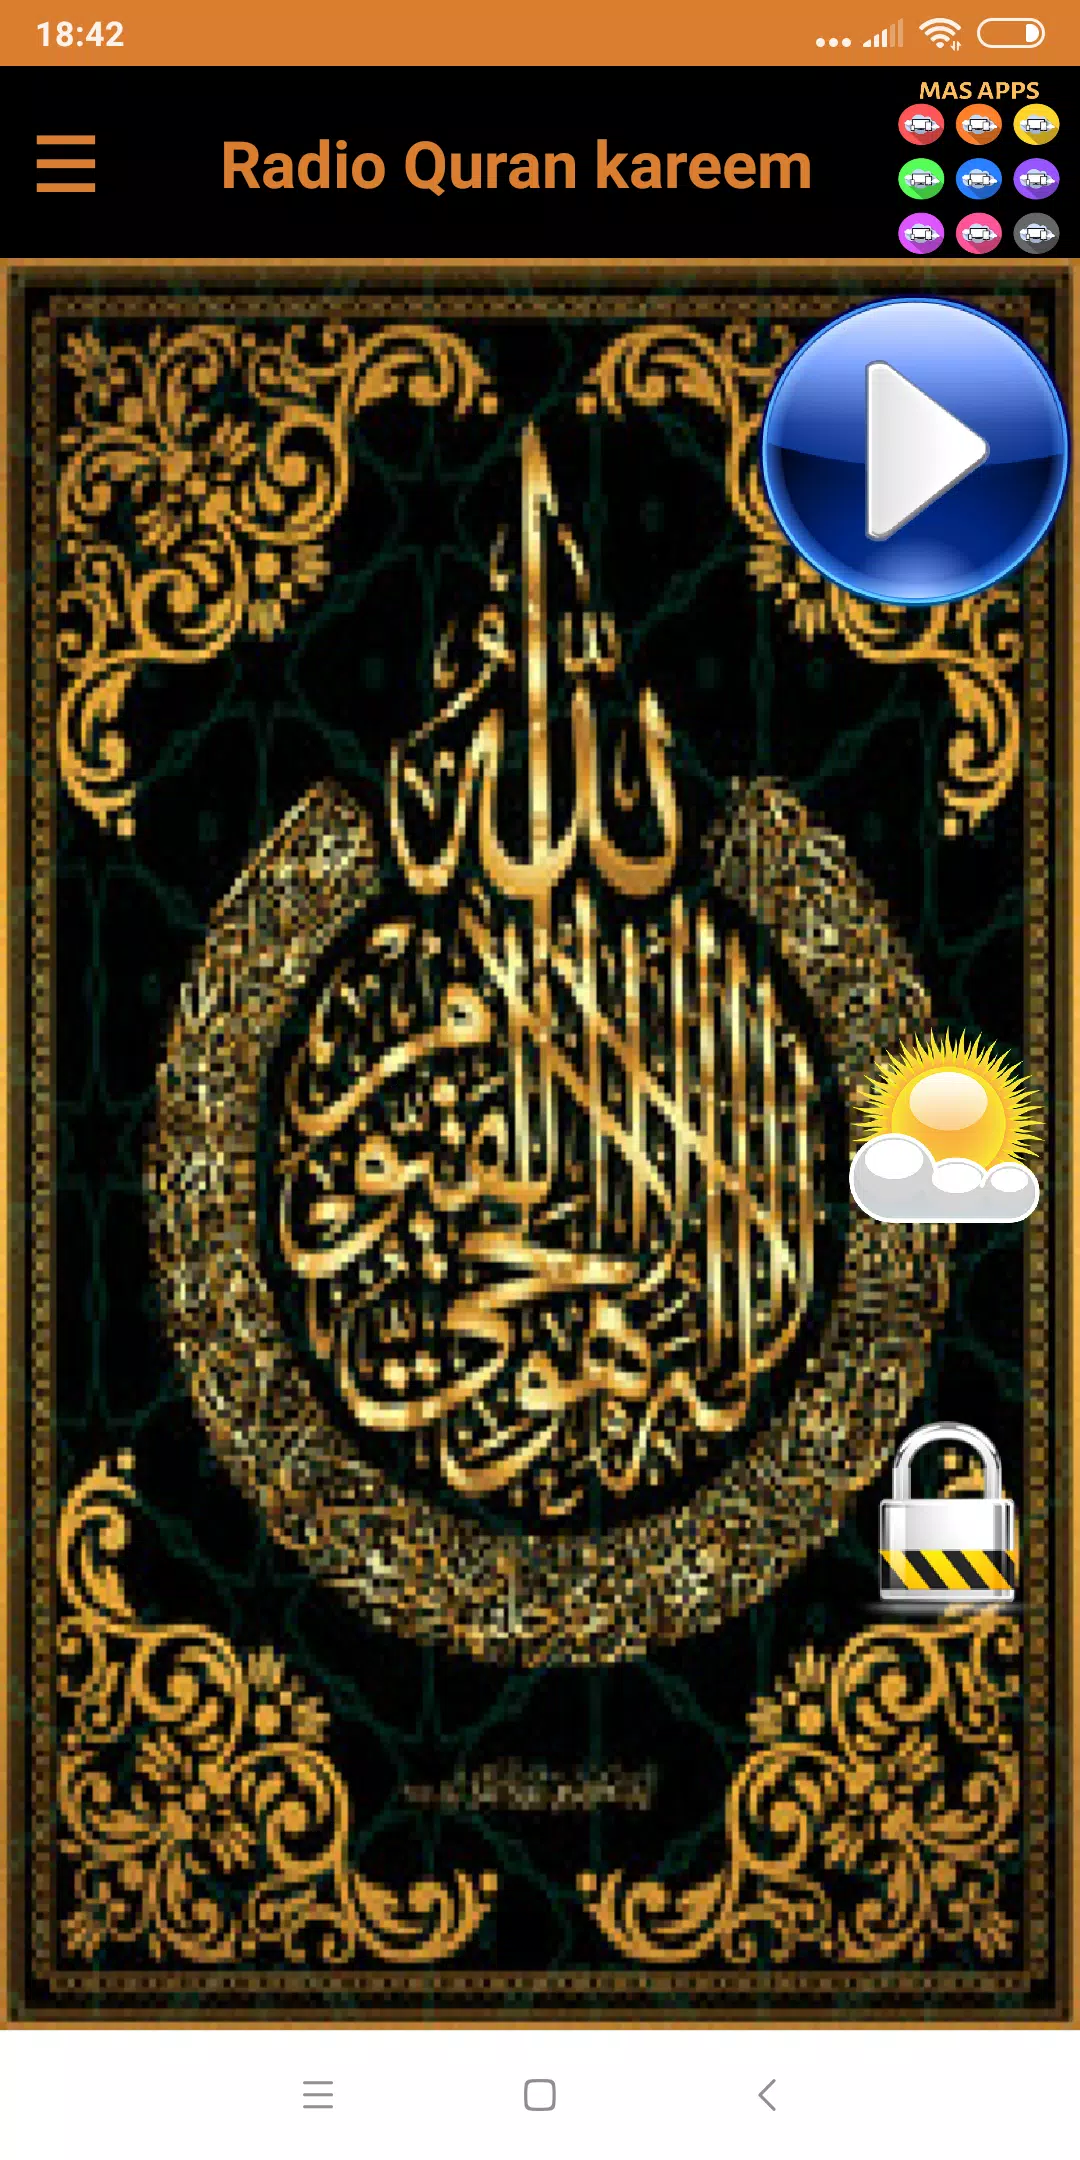 Abu Dhabi Quran kareem Radio Online Gratis APK for Android Download